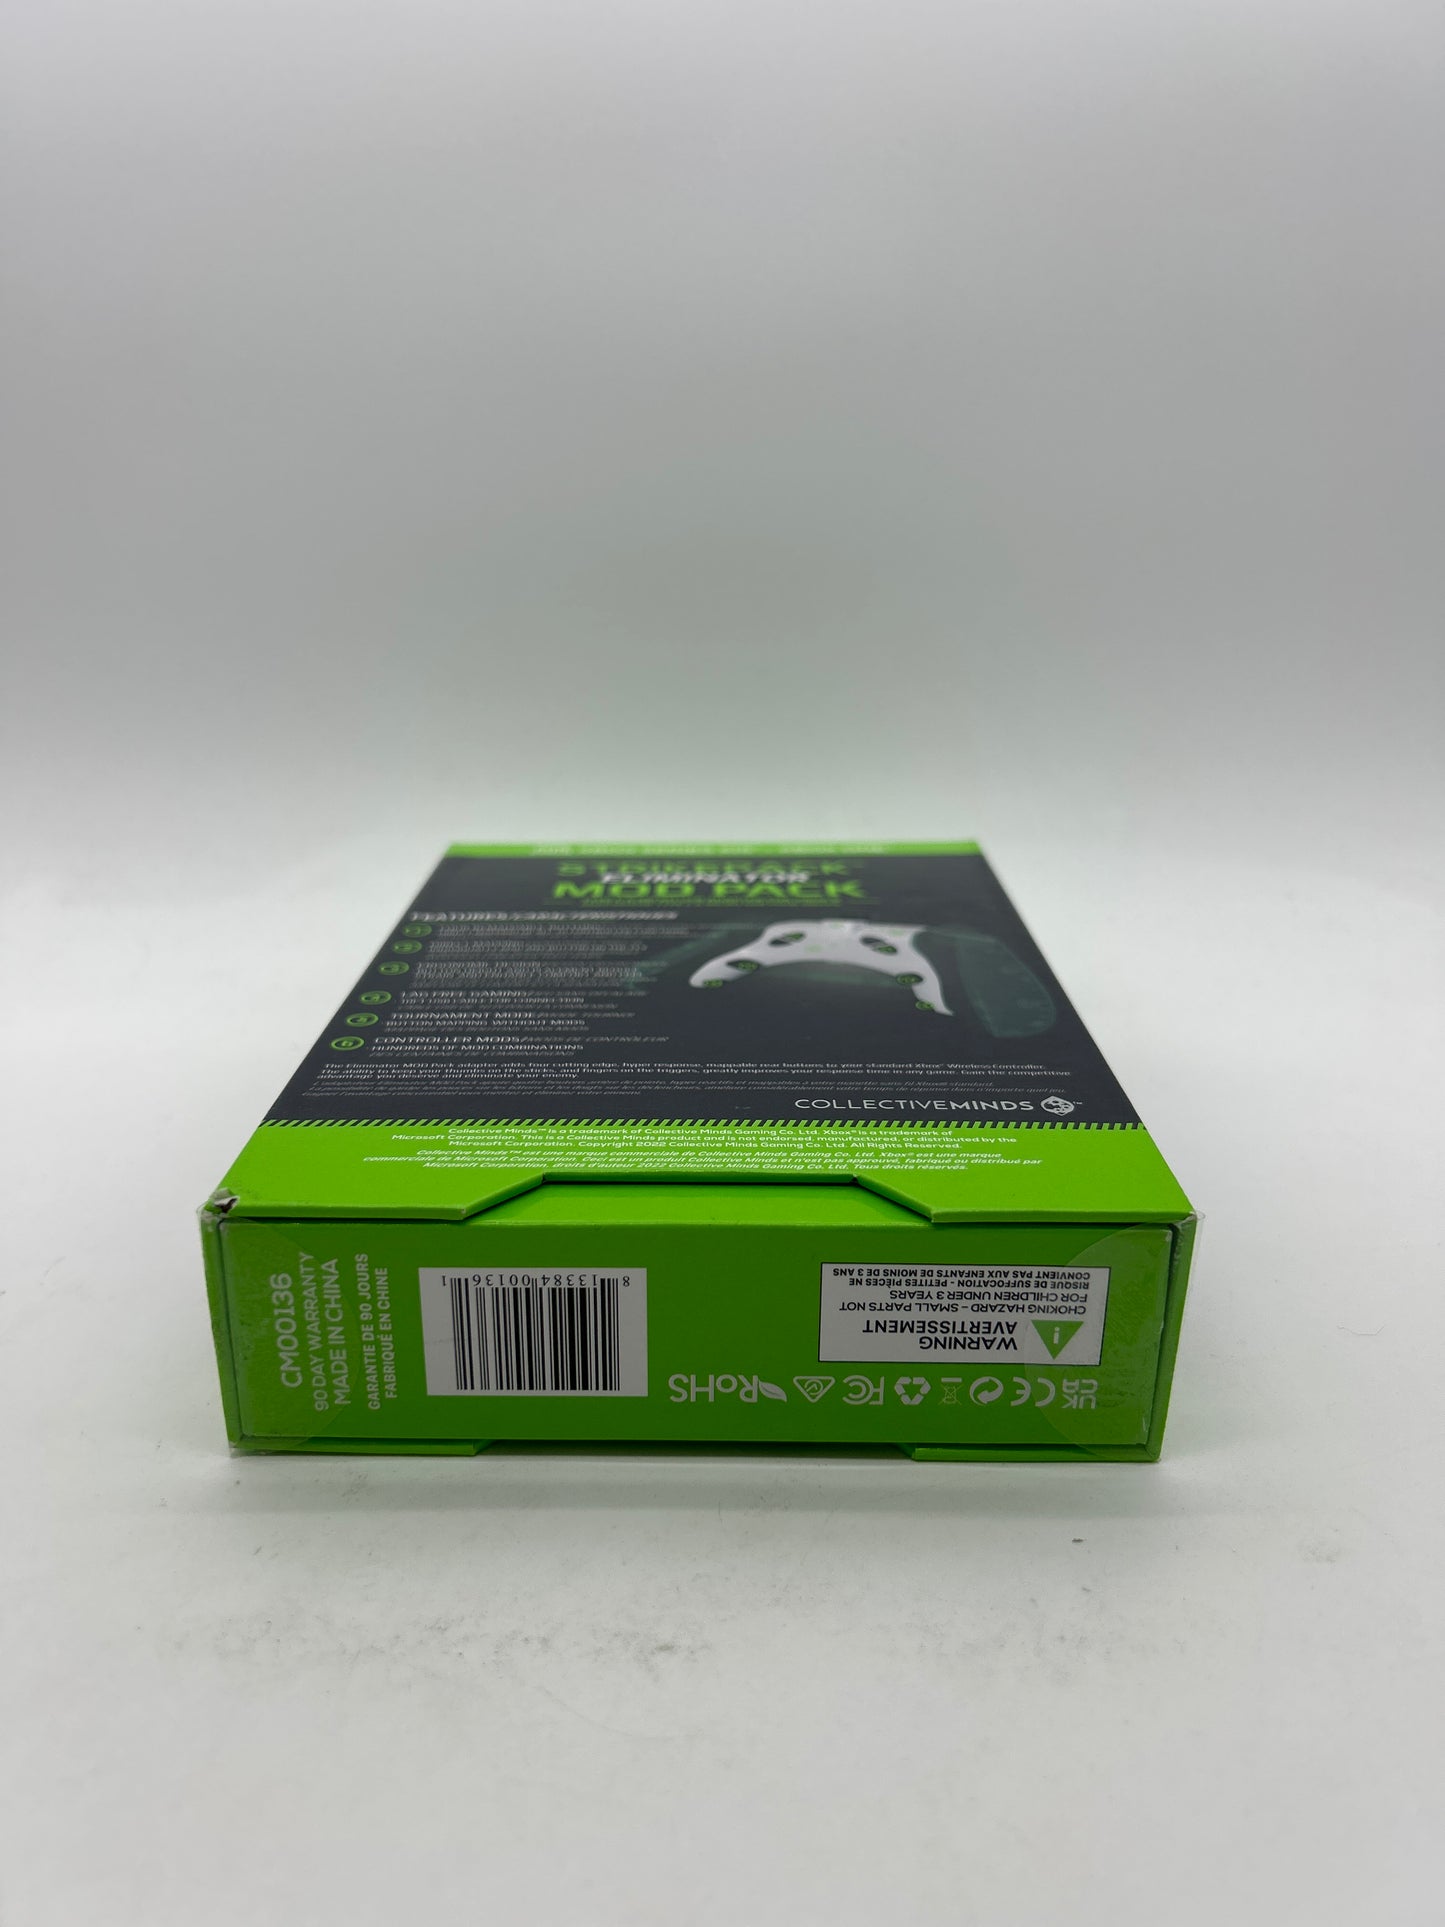 New Strikepack Eliminator White CM00136 For Xbox Series X|S Xbox One (Copy)